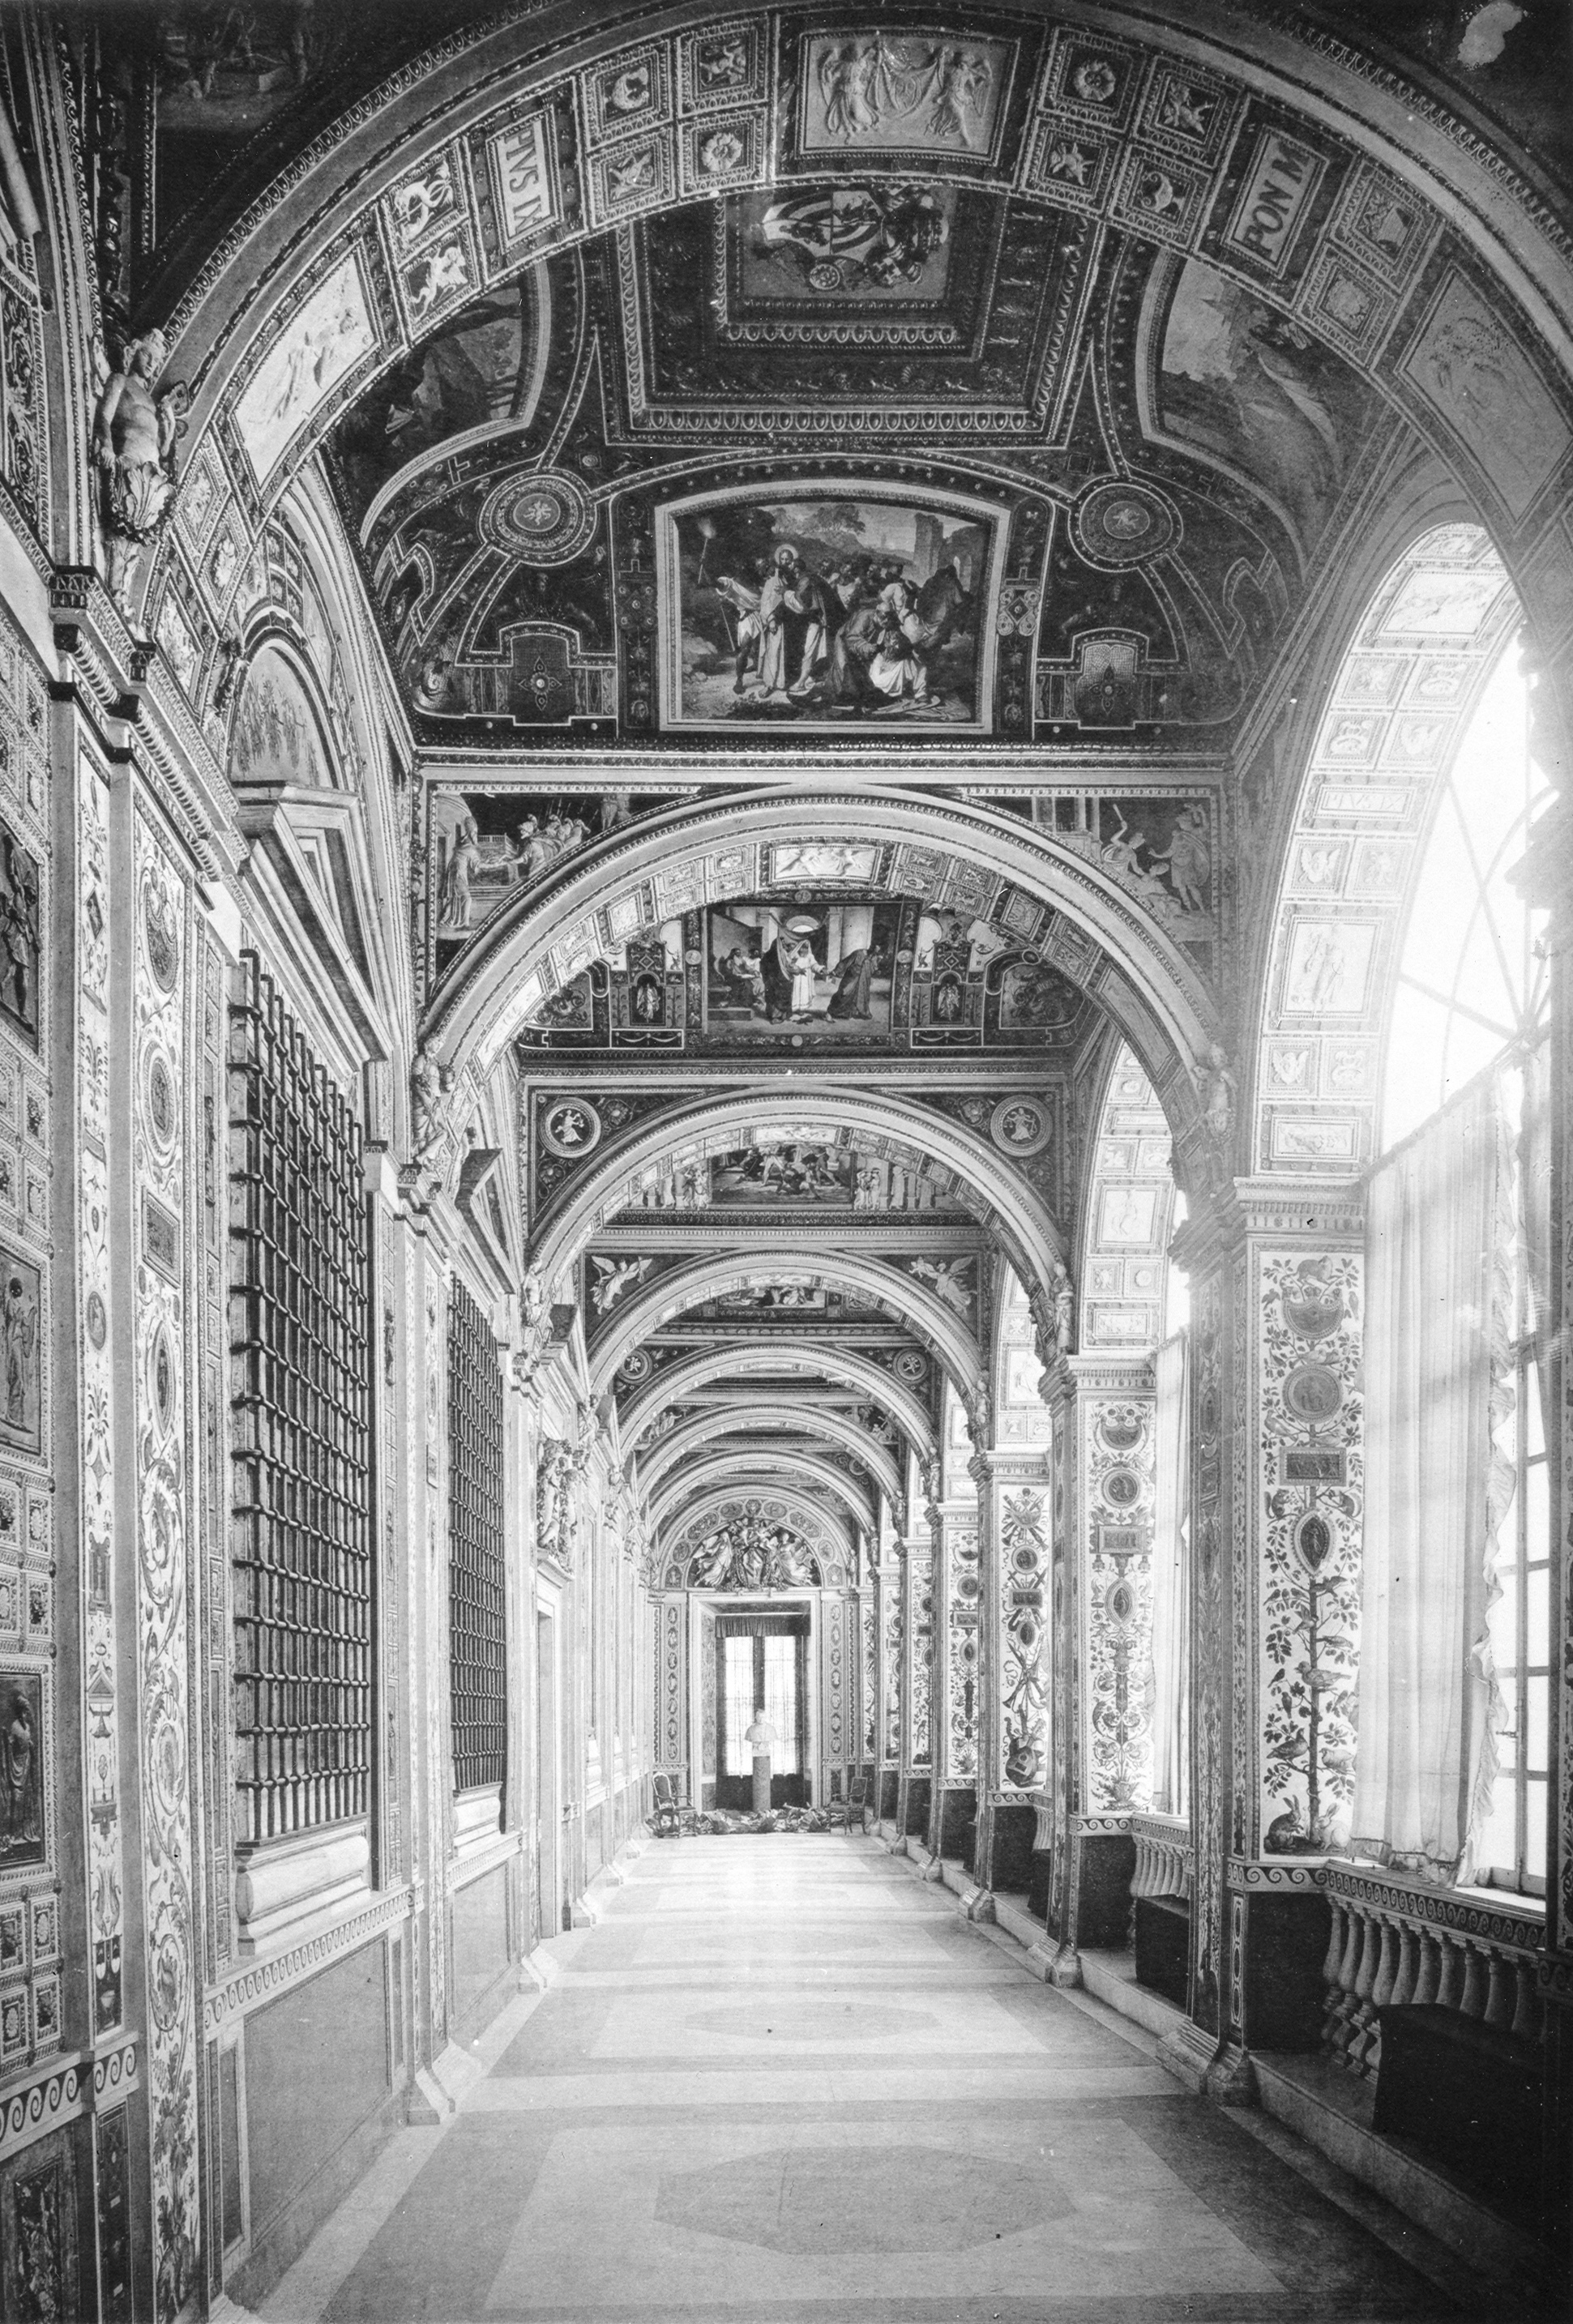 Raphael's Loggia in the Vatican.